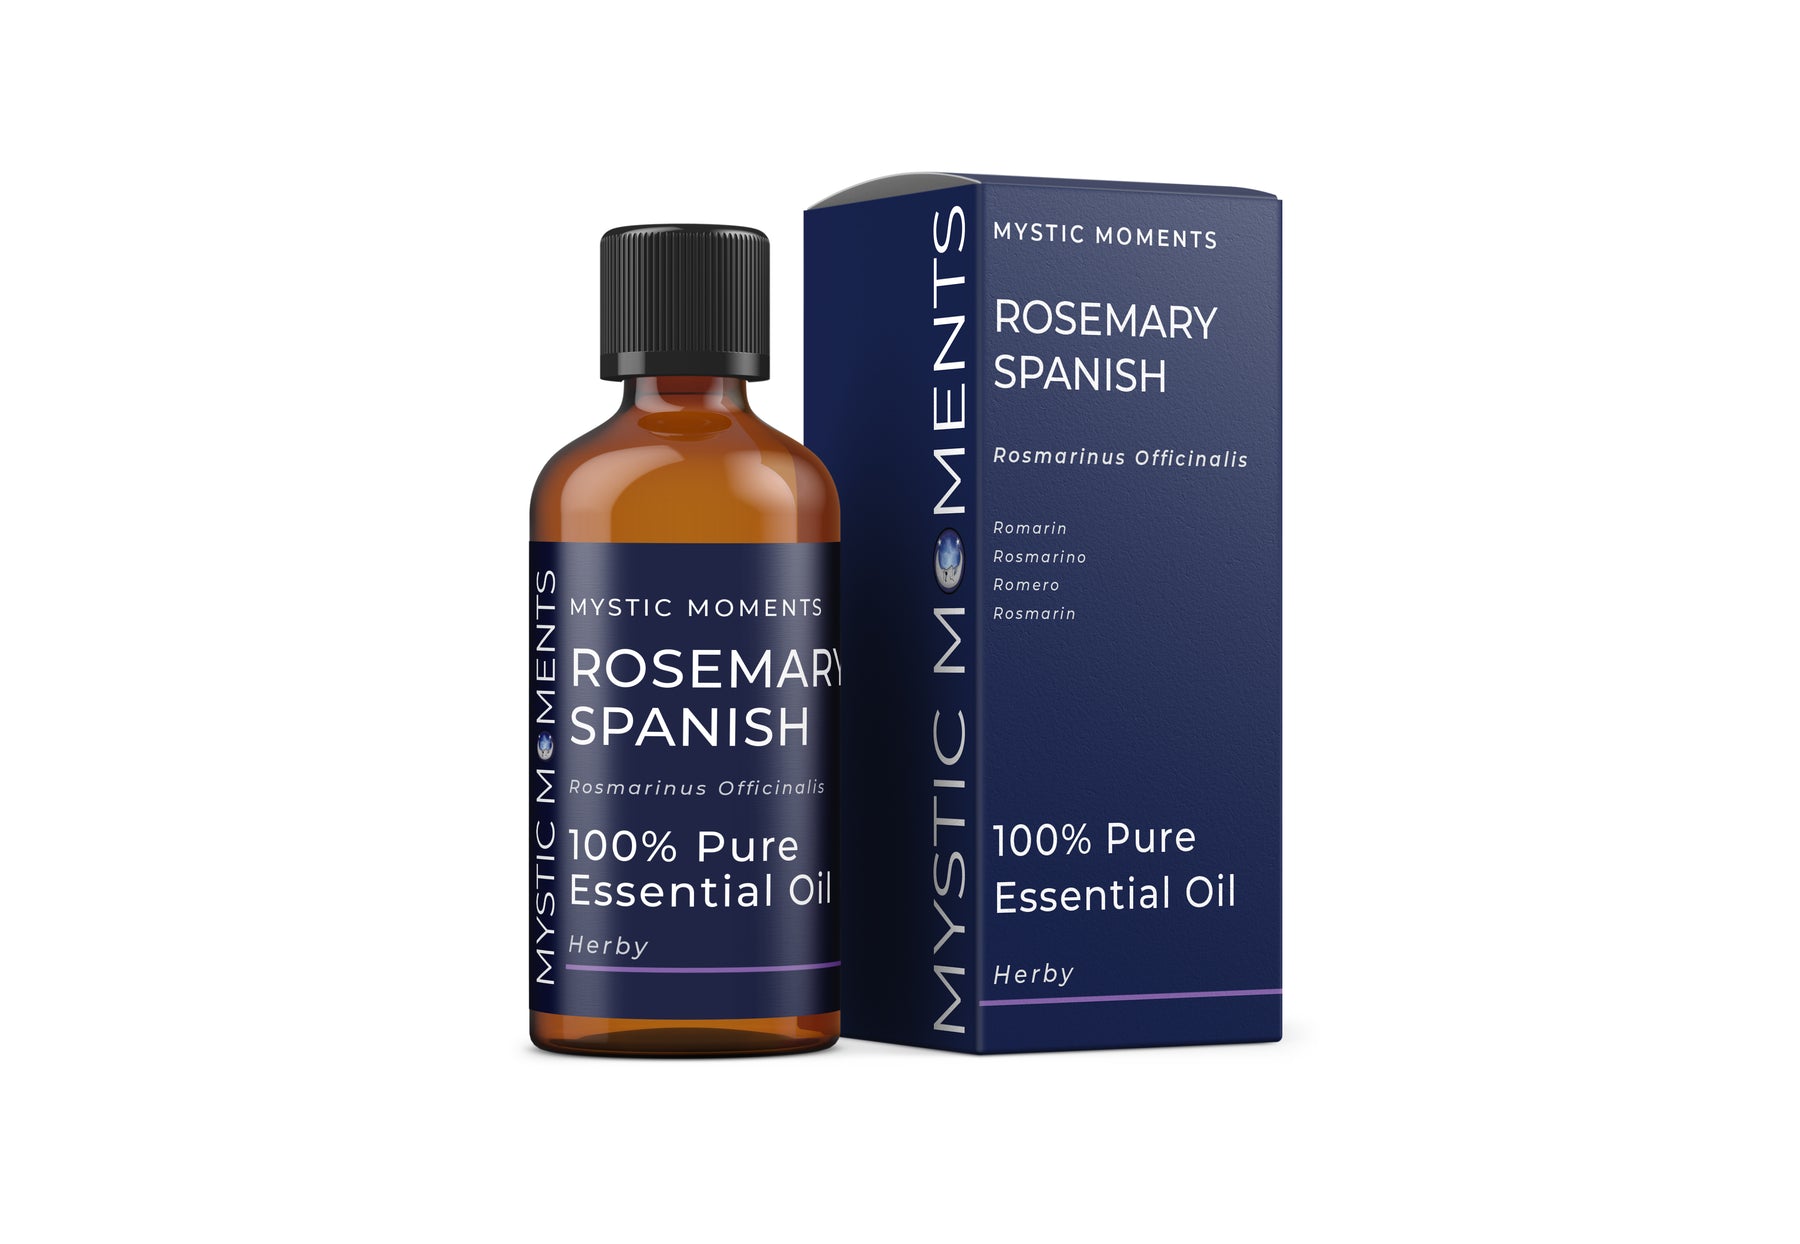 Rosemary Spanish Essential Oil * Bath Bomb Press